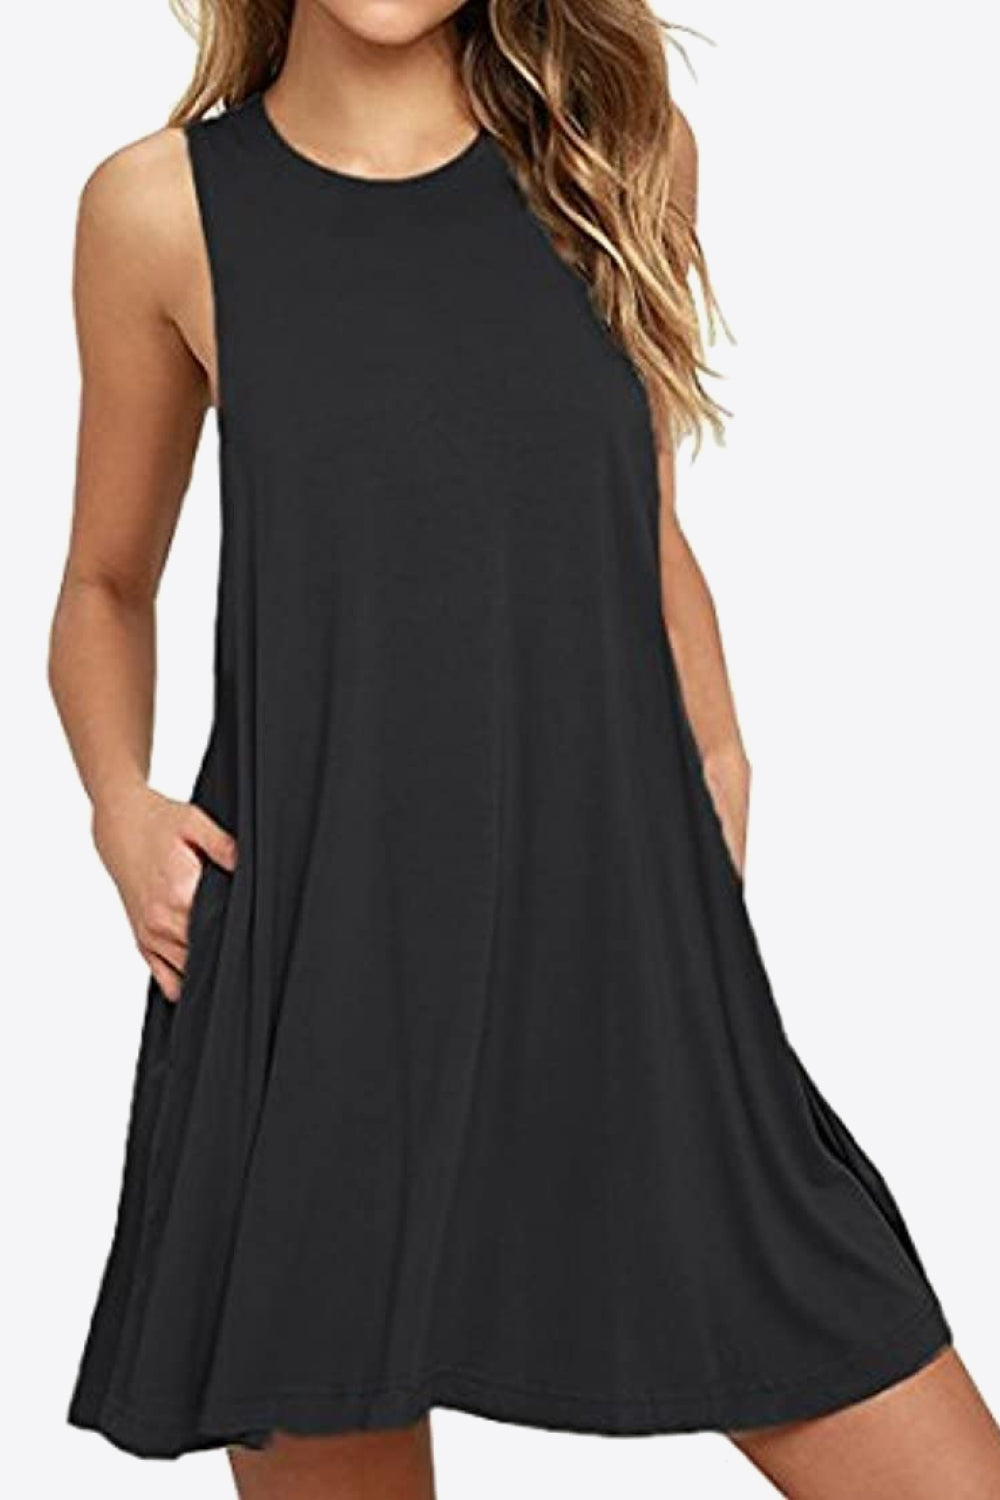 Women's Full Size Round Neck Sleeveless Dress with Pockets